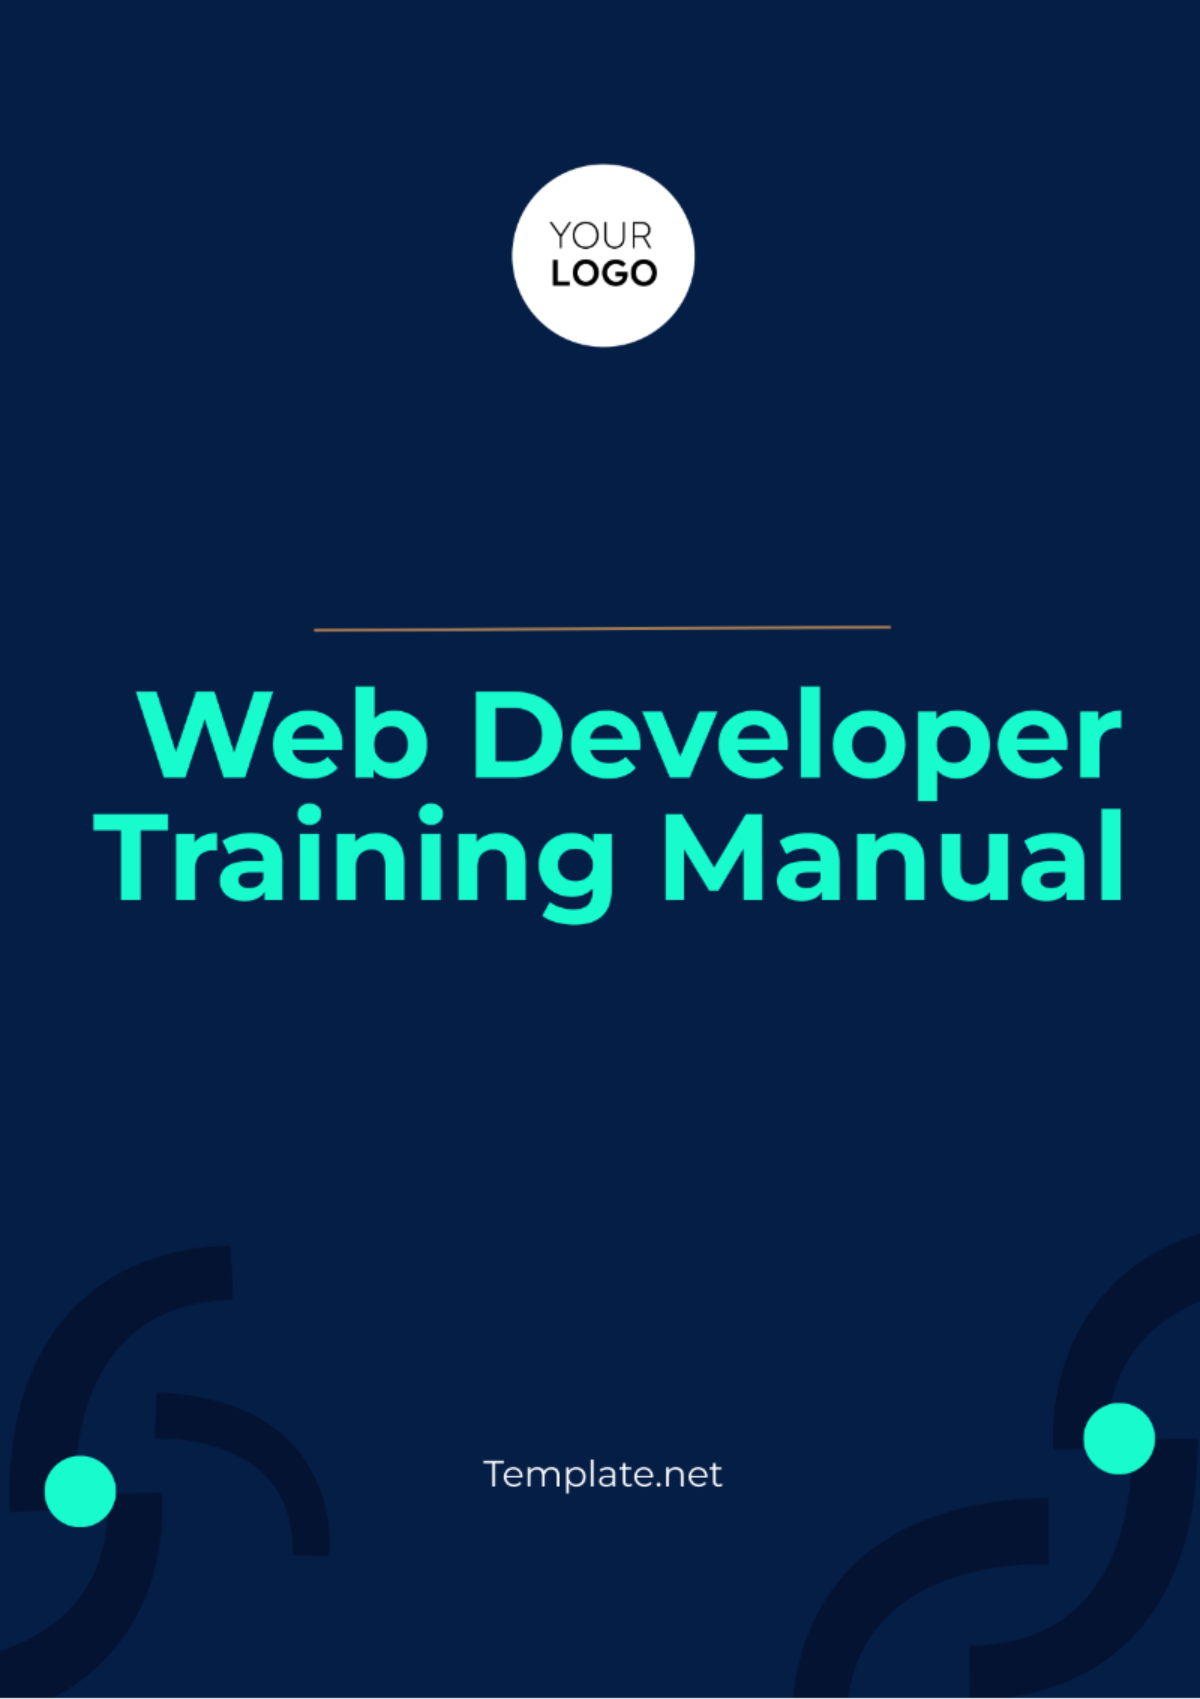 Web Developer Training Manual Template